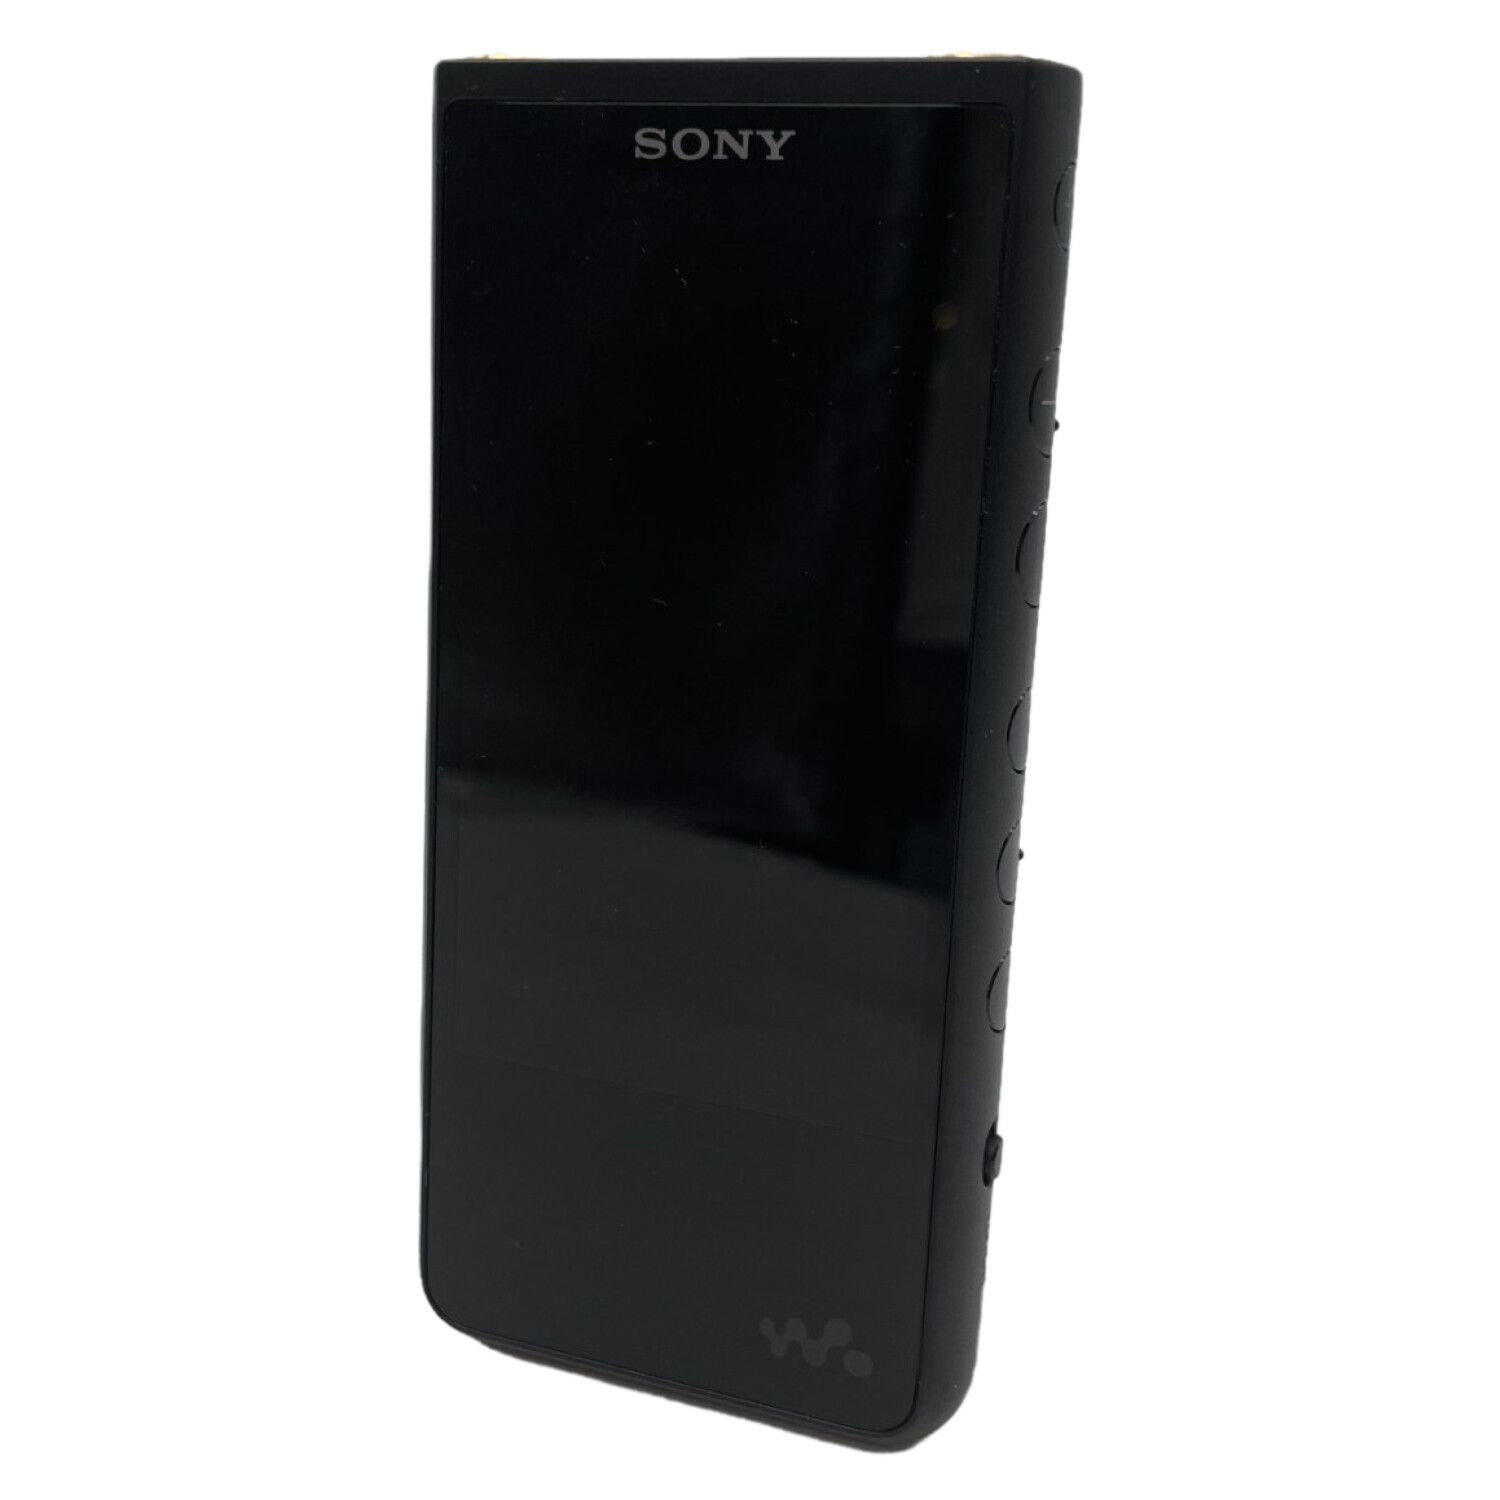 Sony walkman nw-zx507 シルバー